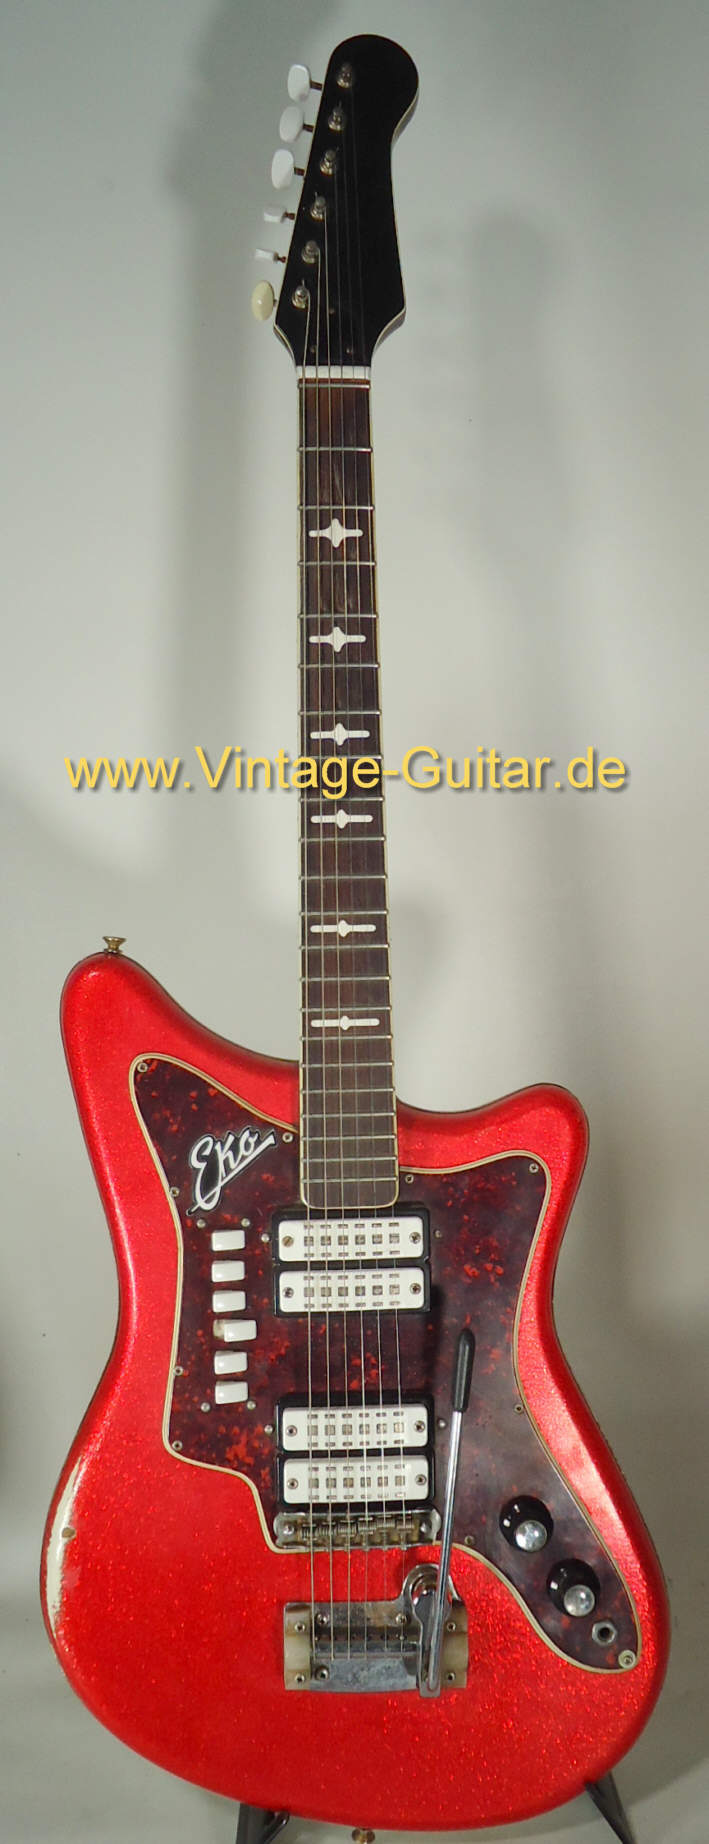 img/vintage/190/Eko 500 4V guitar a.jpg